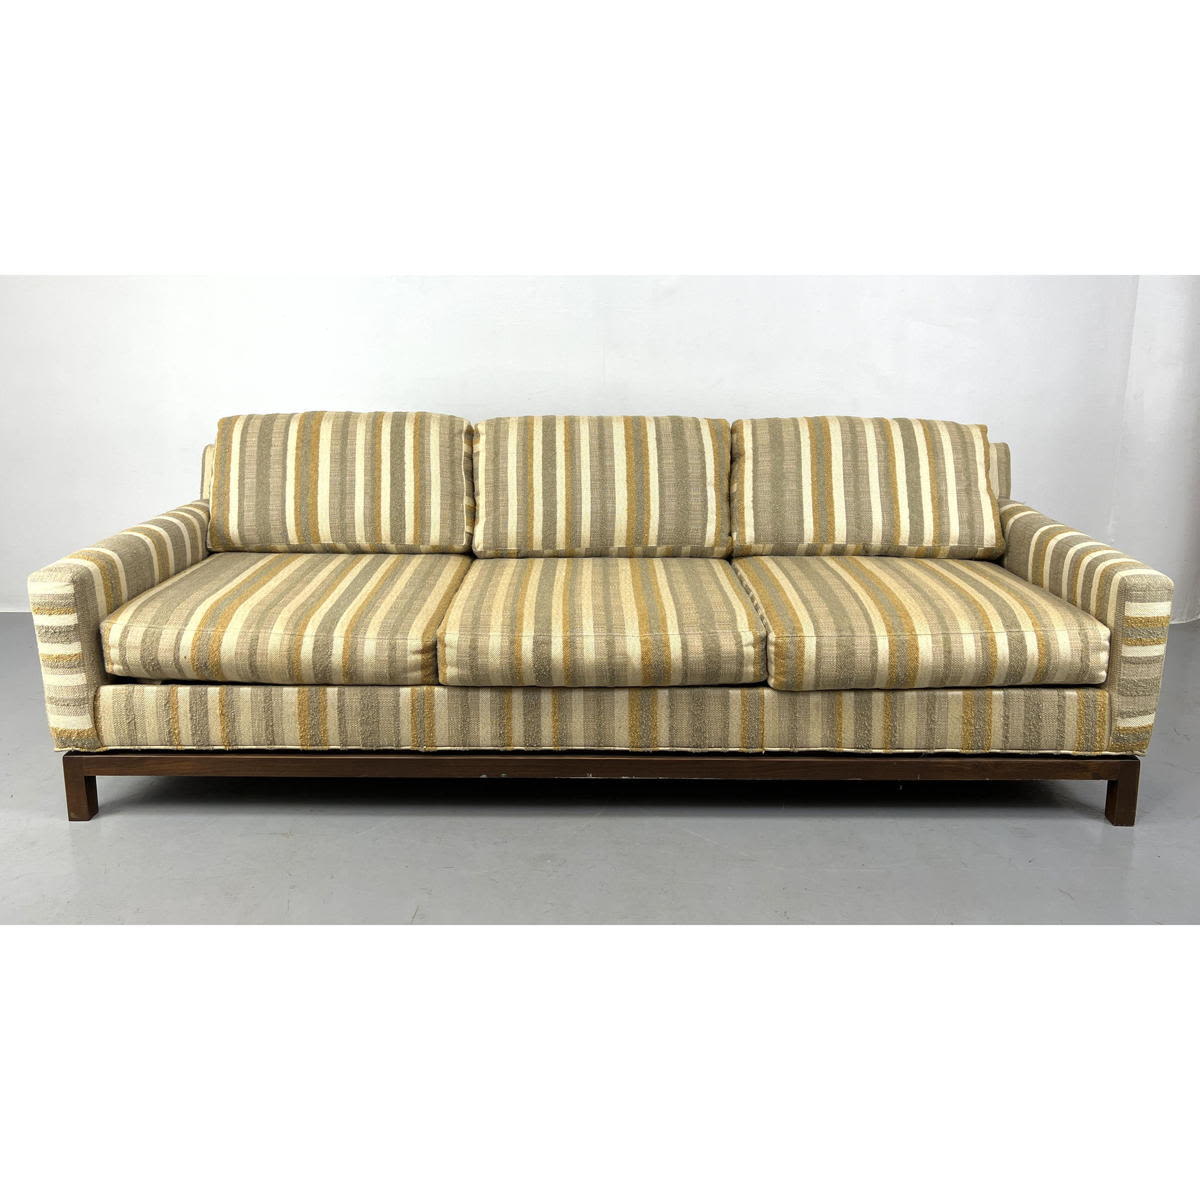 SELIG Monroe Striped Upholstery 2a7860